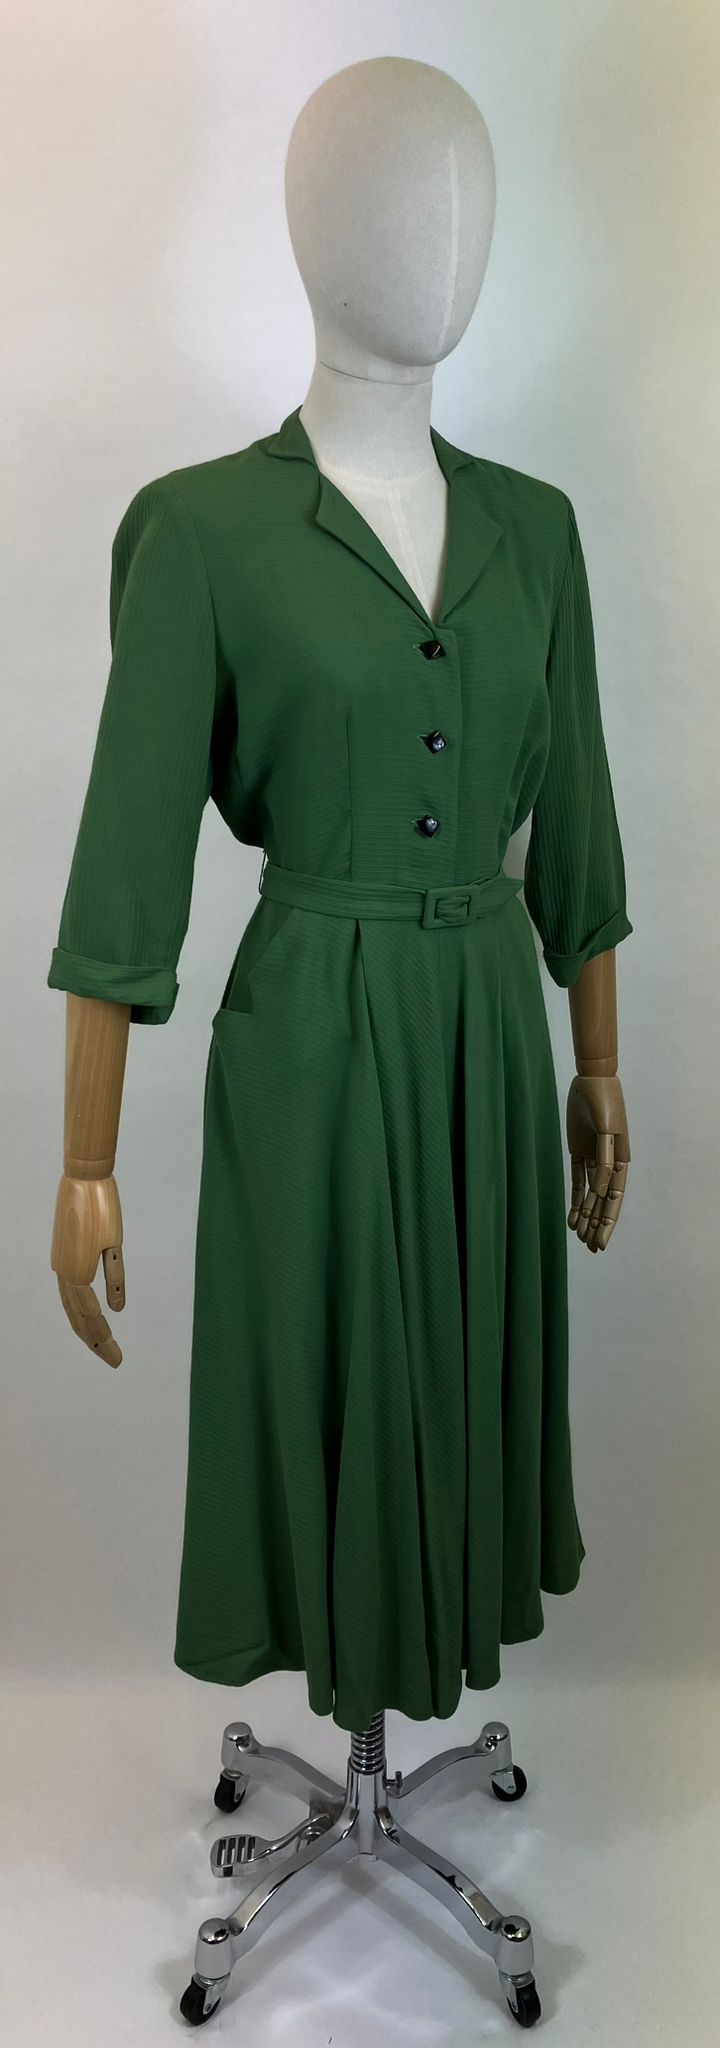 Original 1940’s Fabulous Dress - Emerald Green